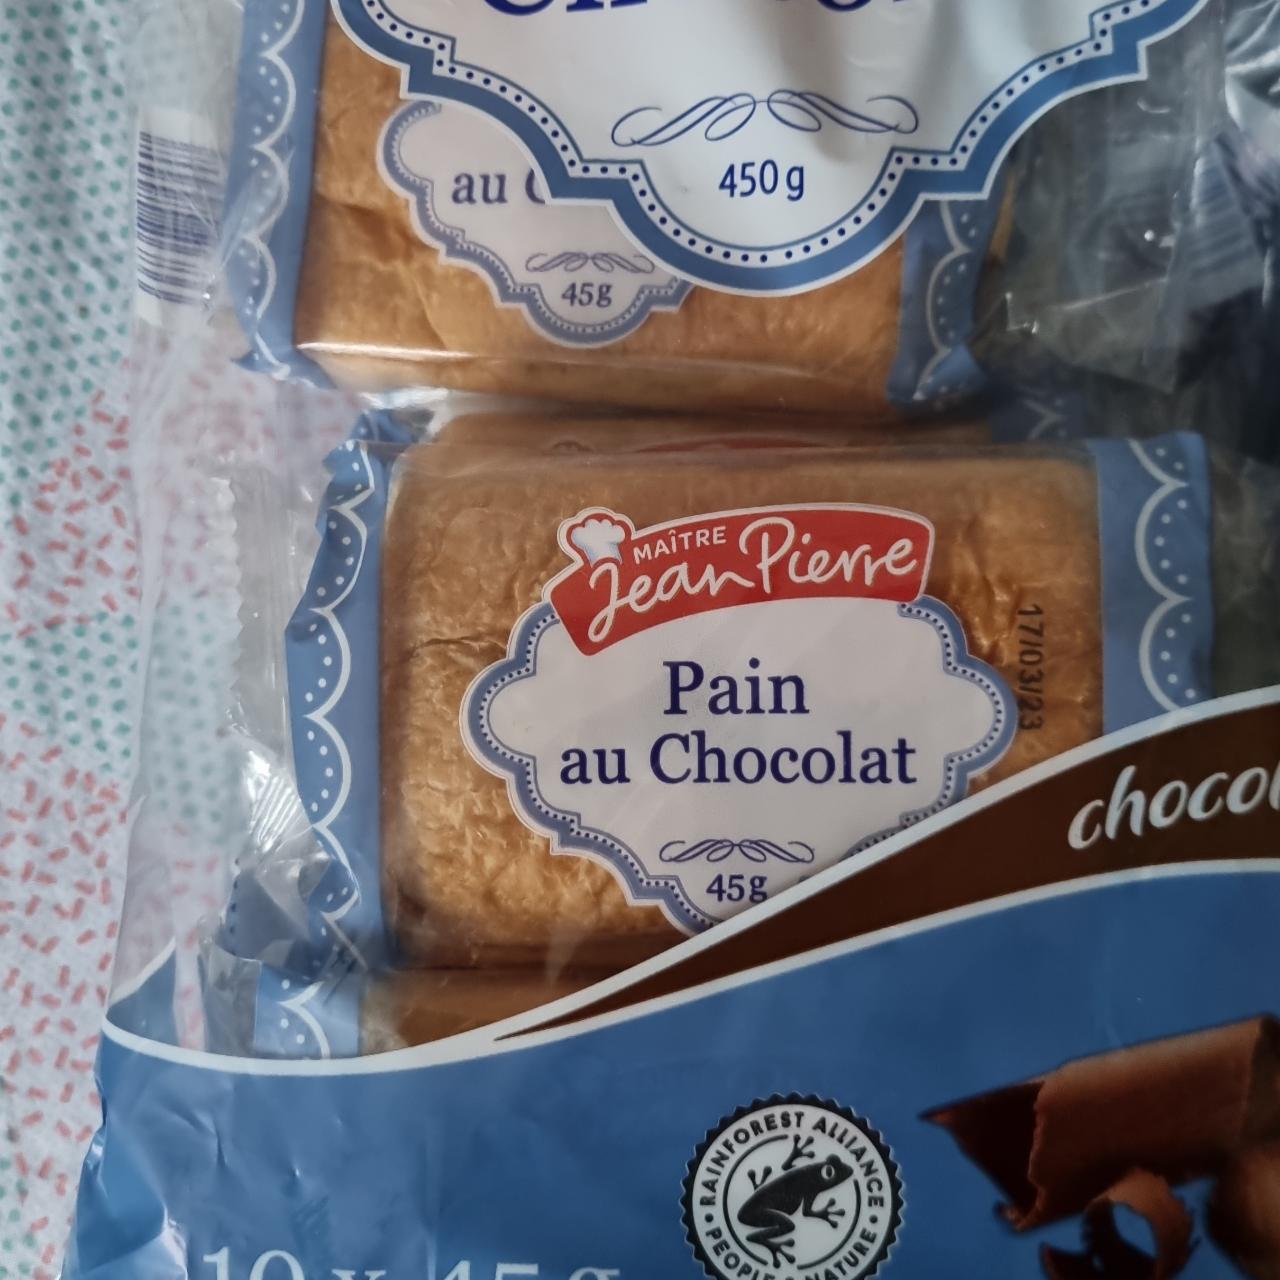 Фото - Булочка с шоколадом Pains au Chocolat Jean Pierre